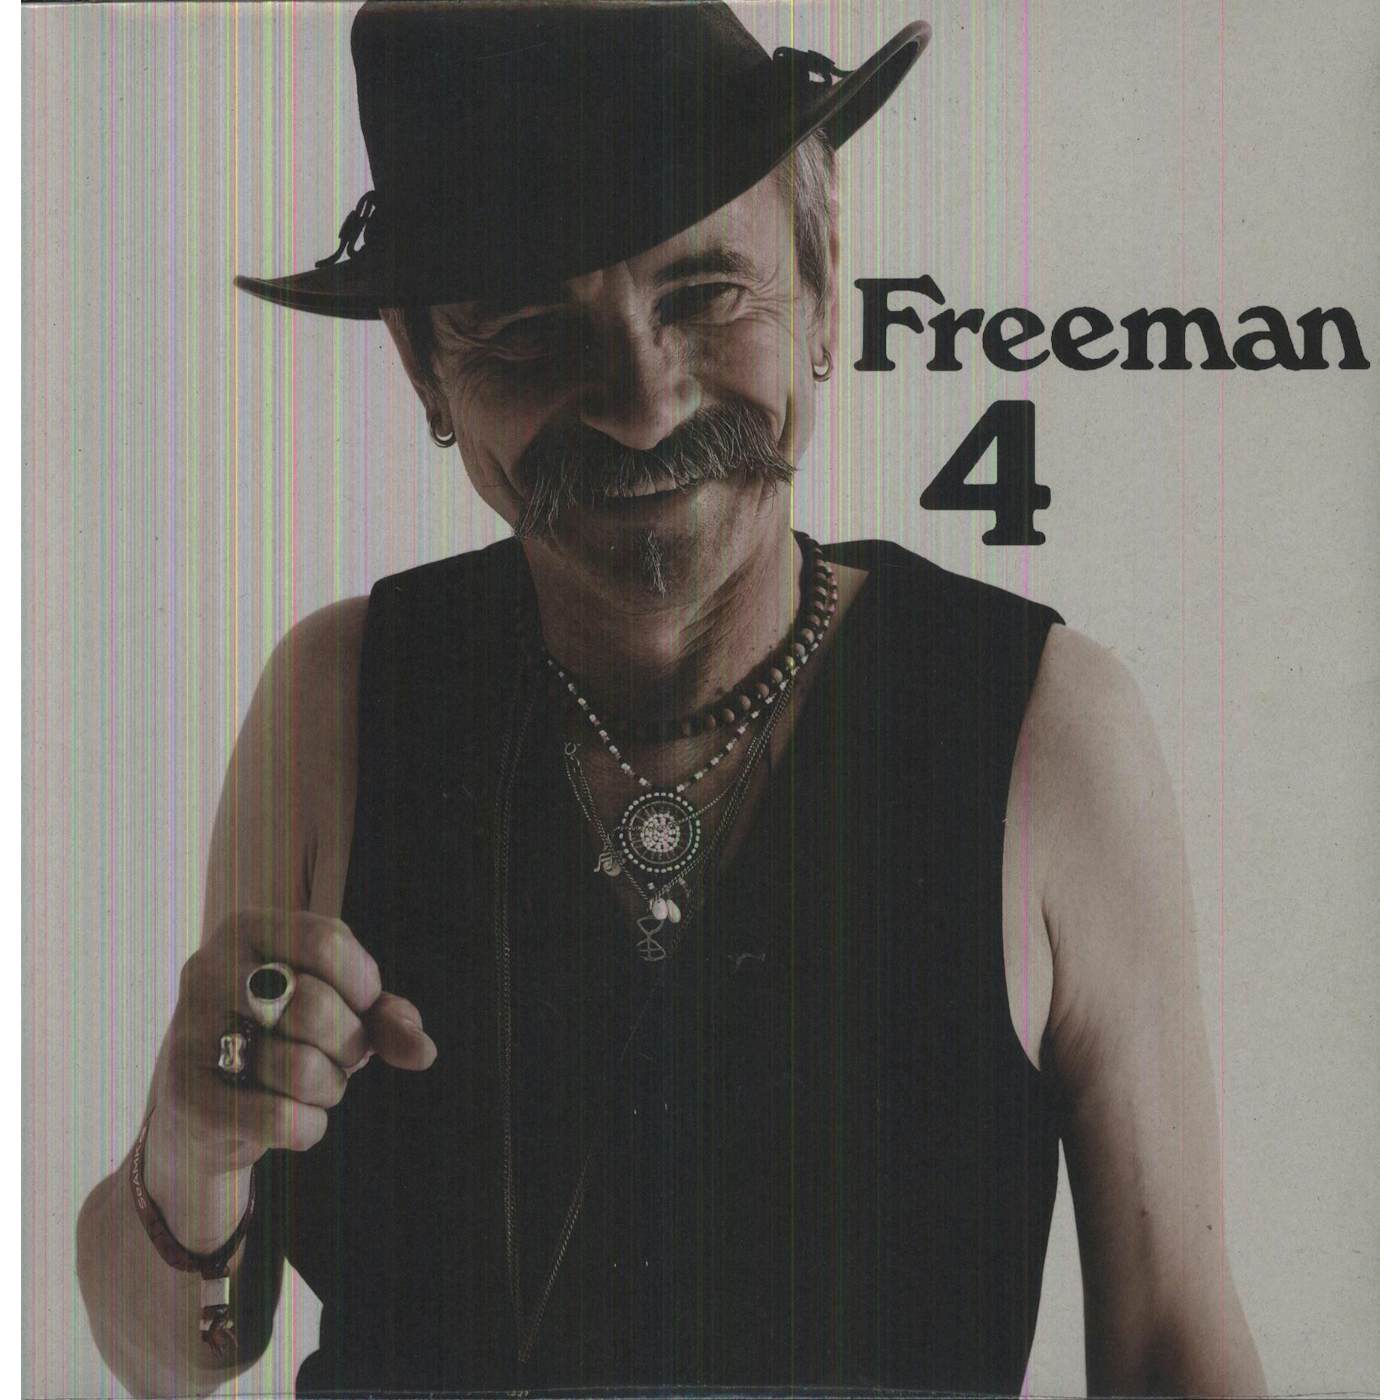 Freeman 4 Vinyl Record